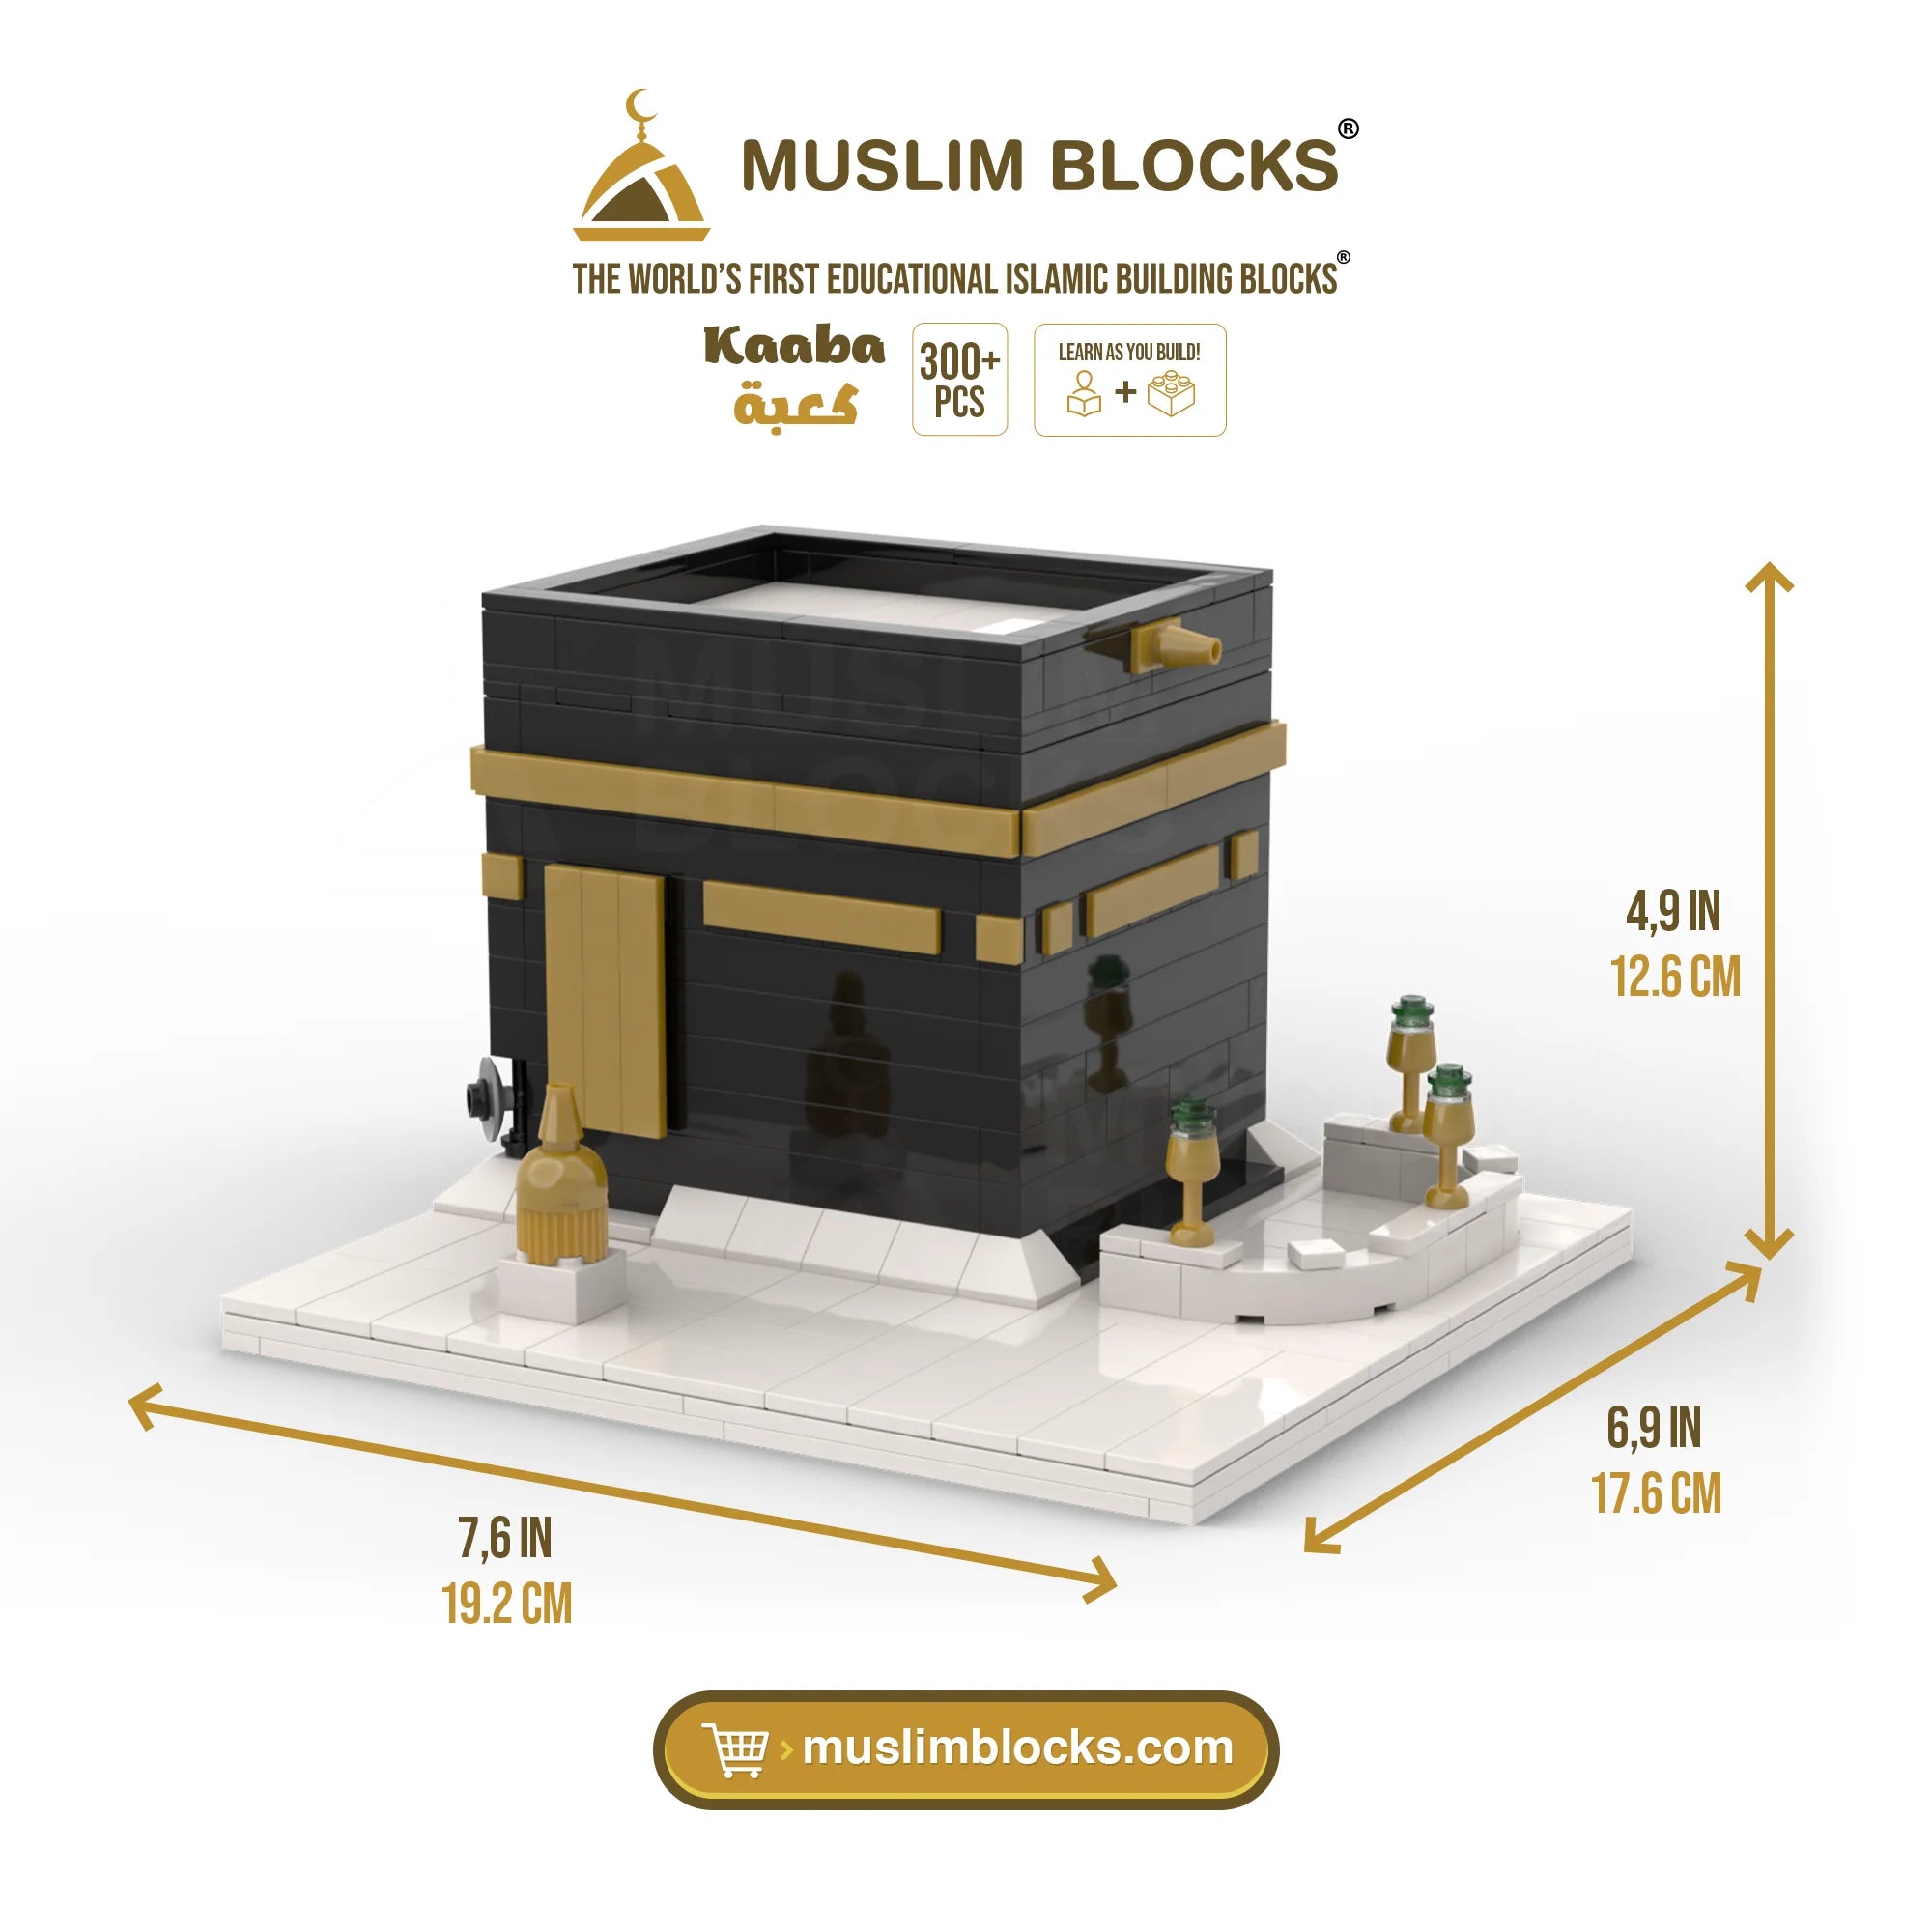 Muslim Blocks